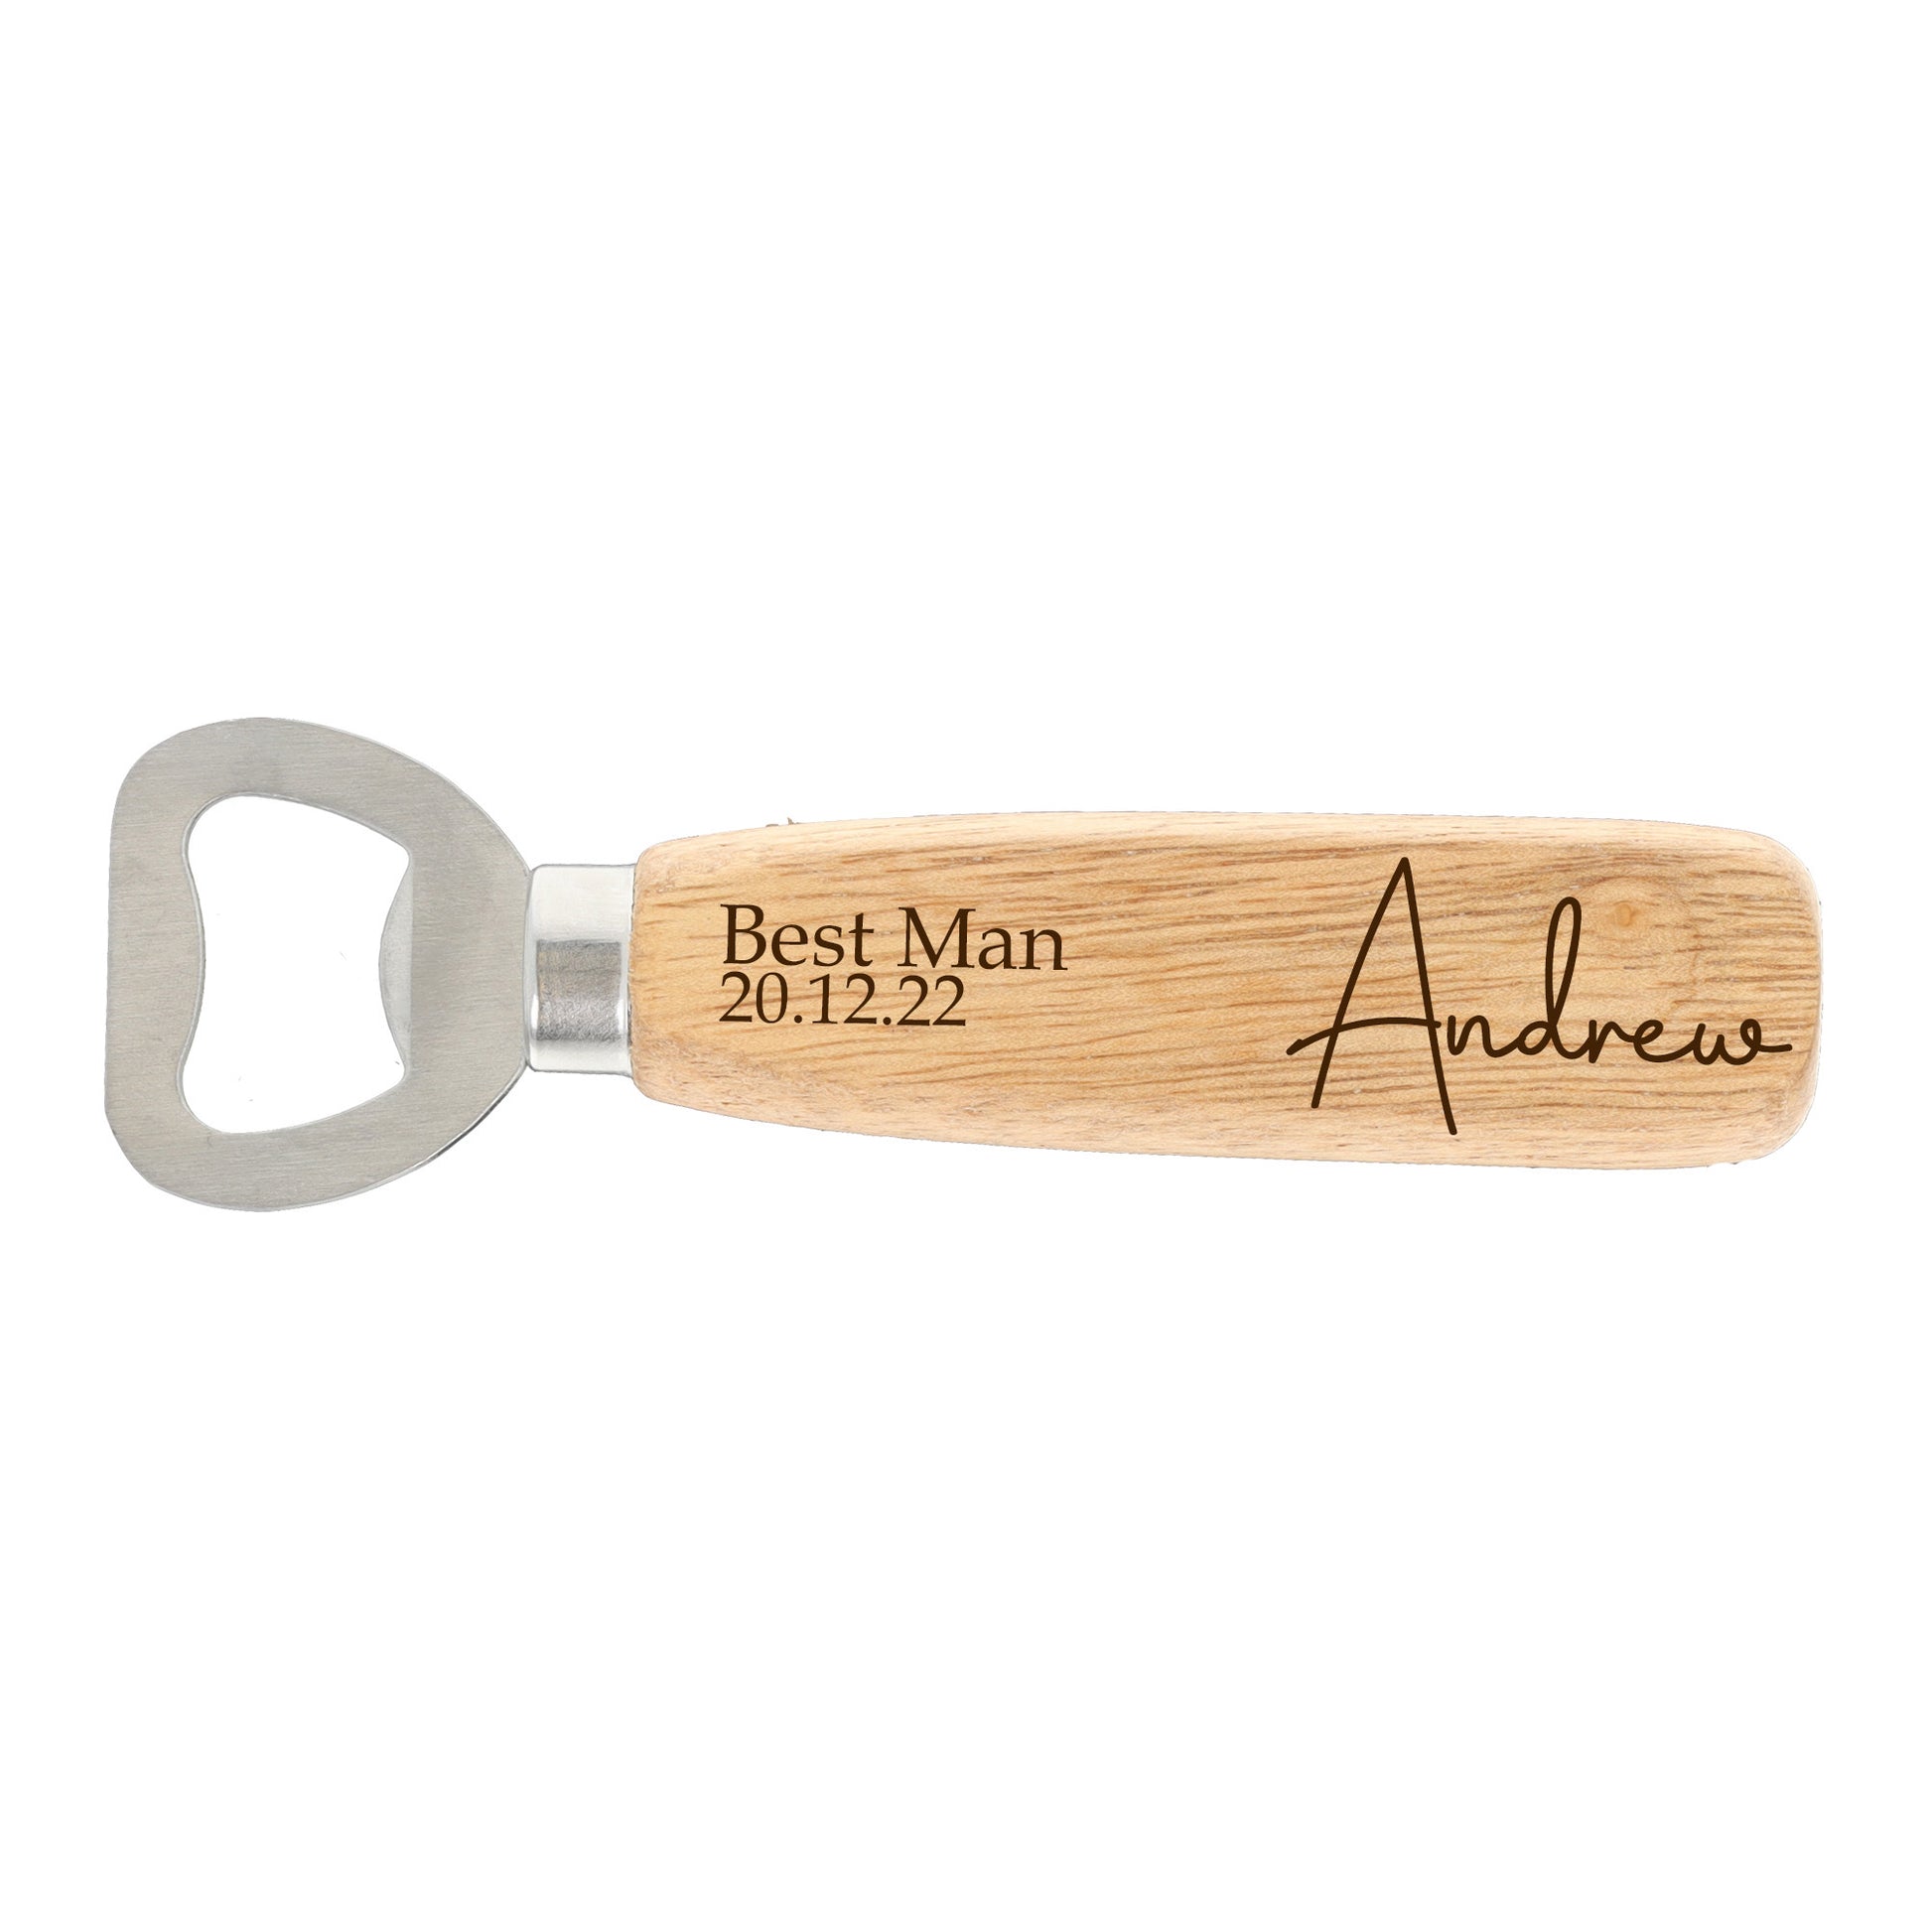 Personalised Engraved Wooden Handle Bottle Opener For Best Man, Groomsman, Father, Usher  - Always Looking Good -   